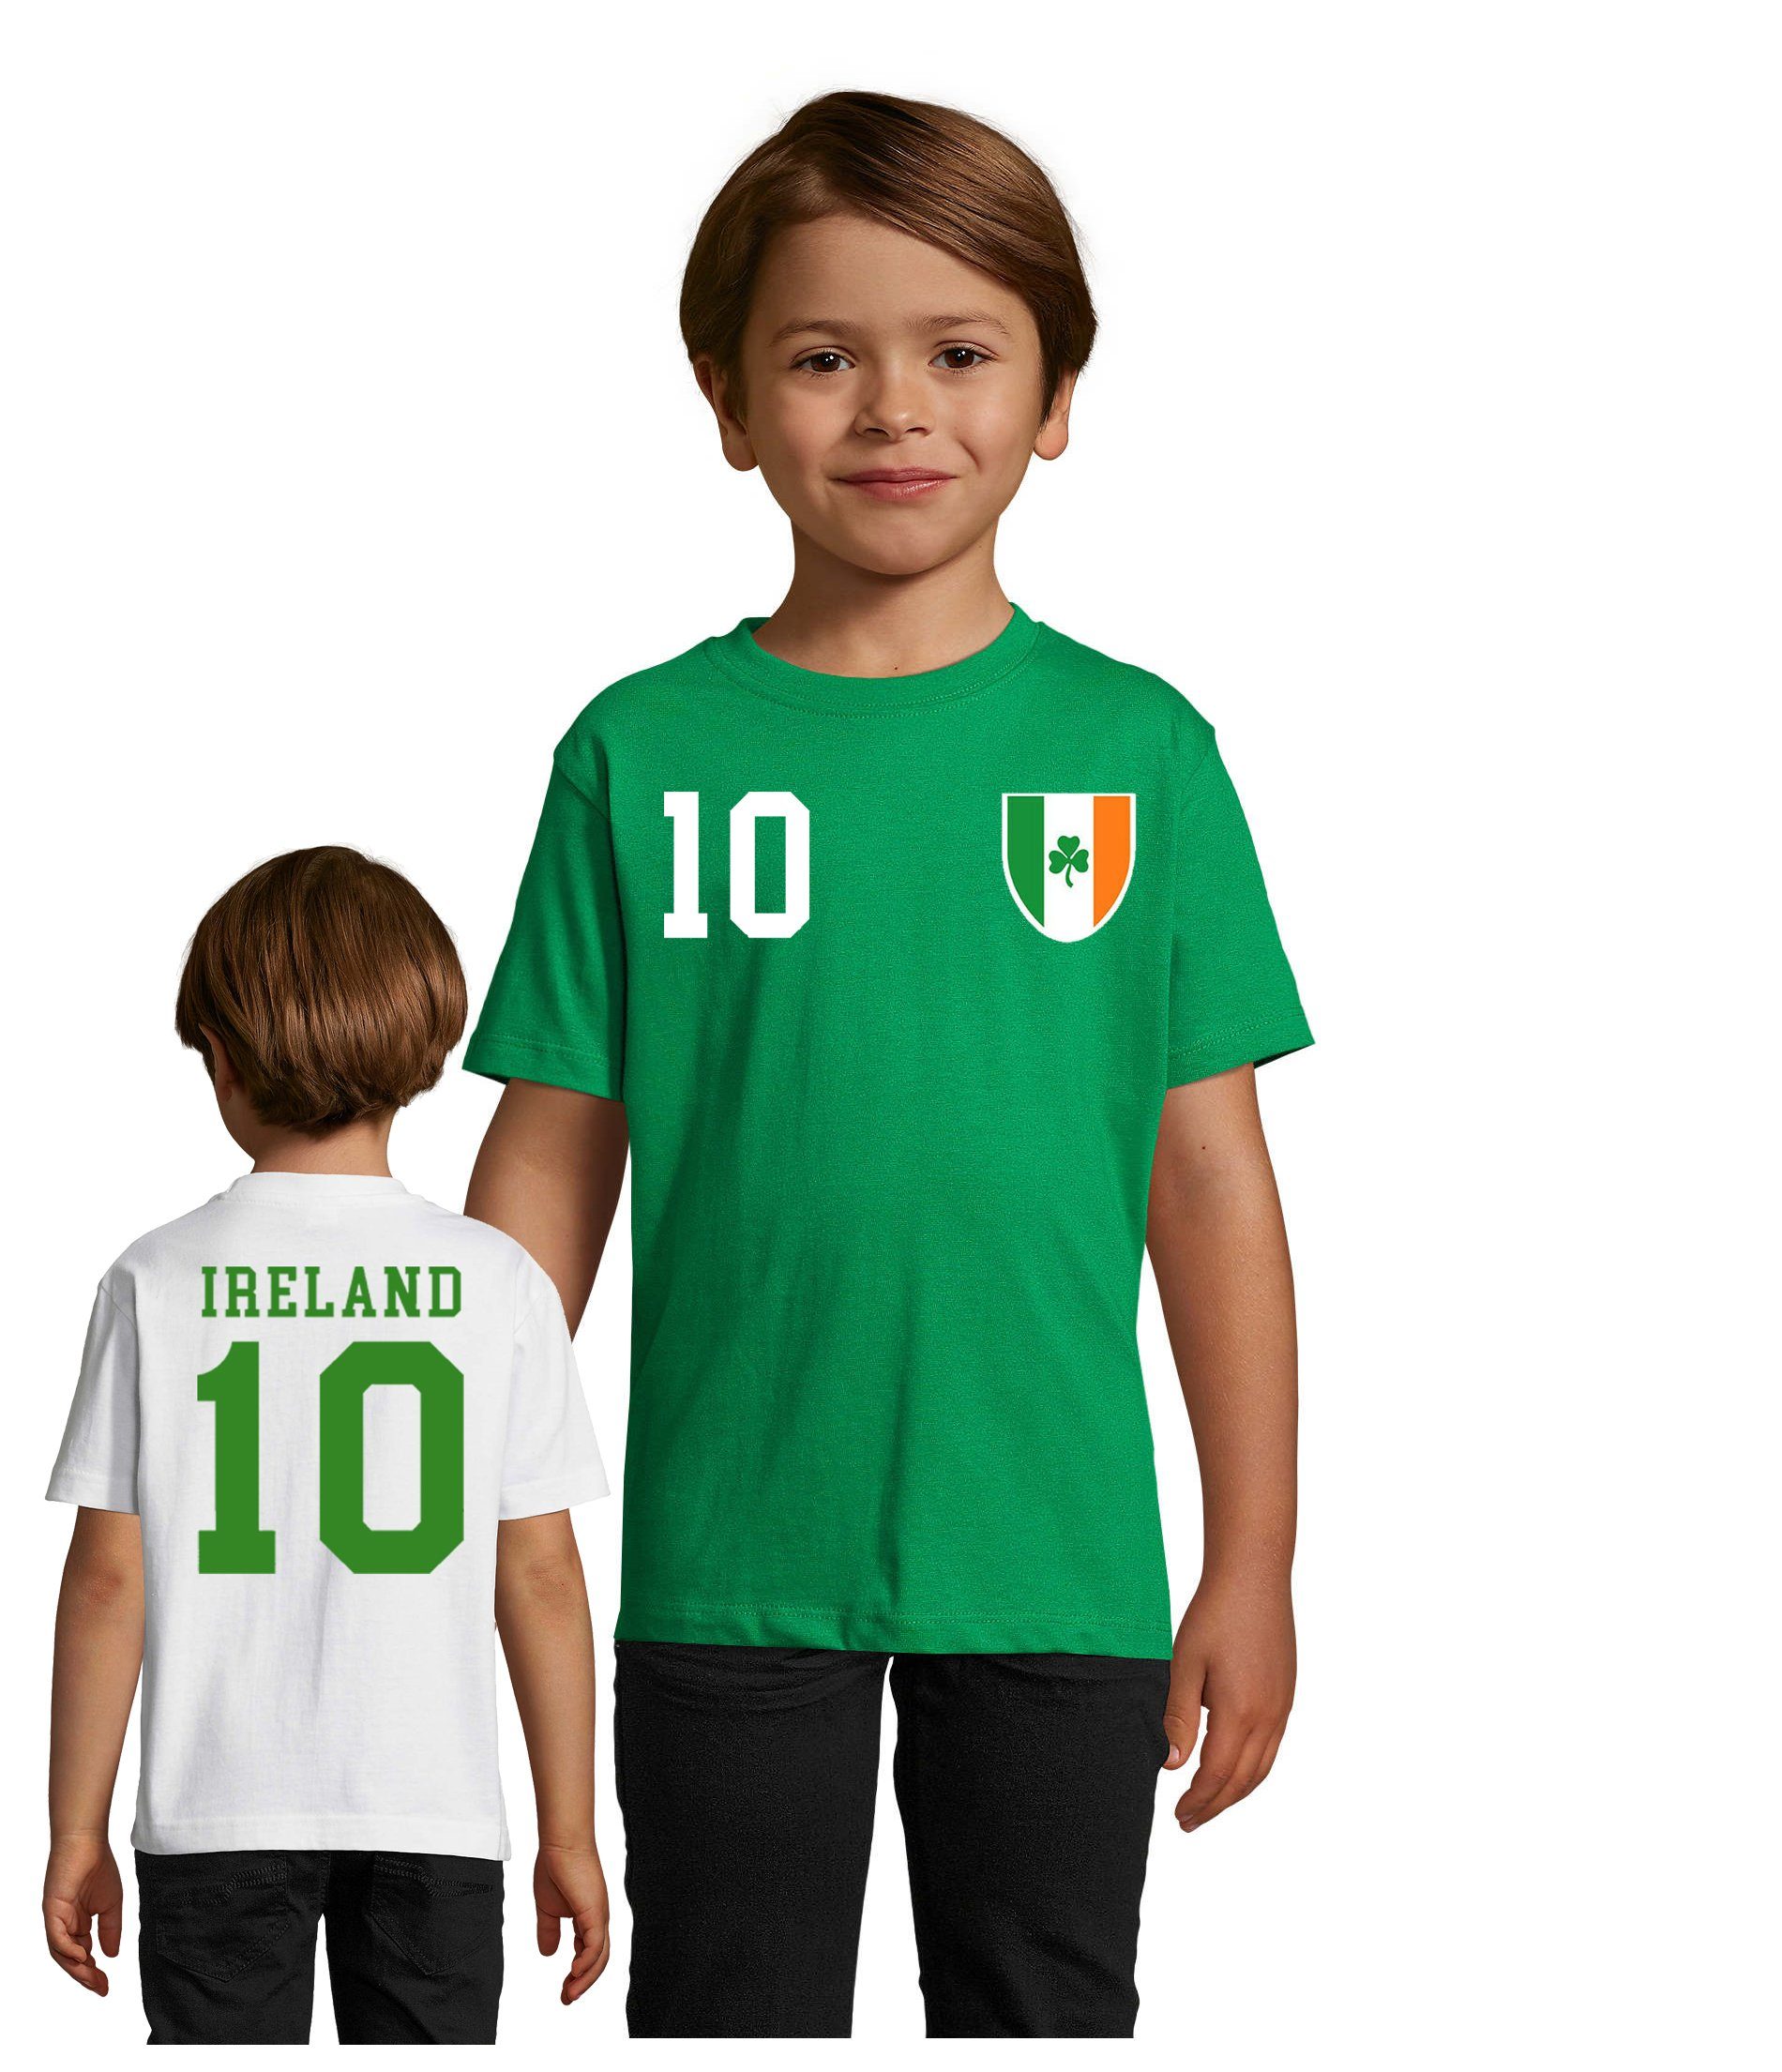 Blondie & Brownie T-Shirt Kinder Irland Sport Trikot Fußball Handball Weltmeister WM EM Weiss/Grün